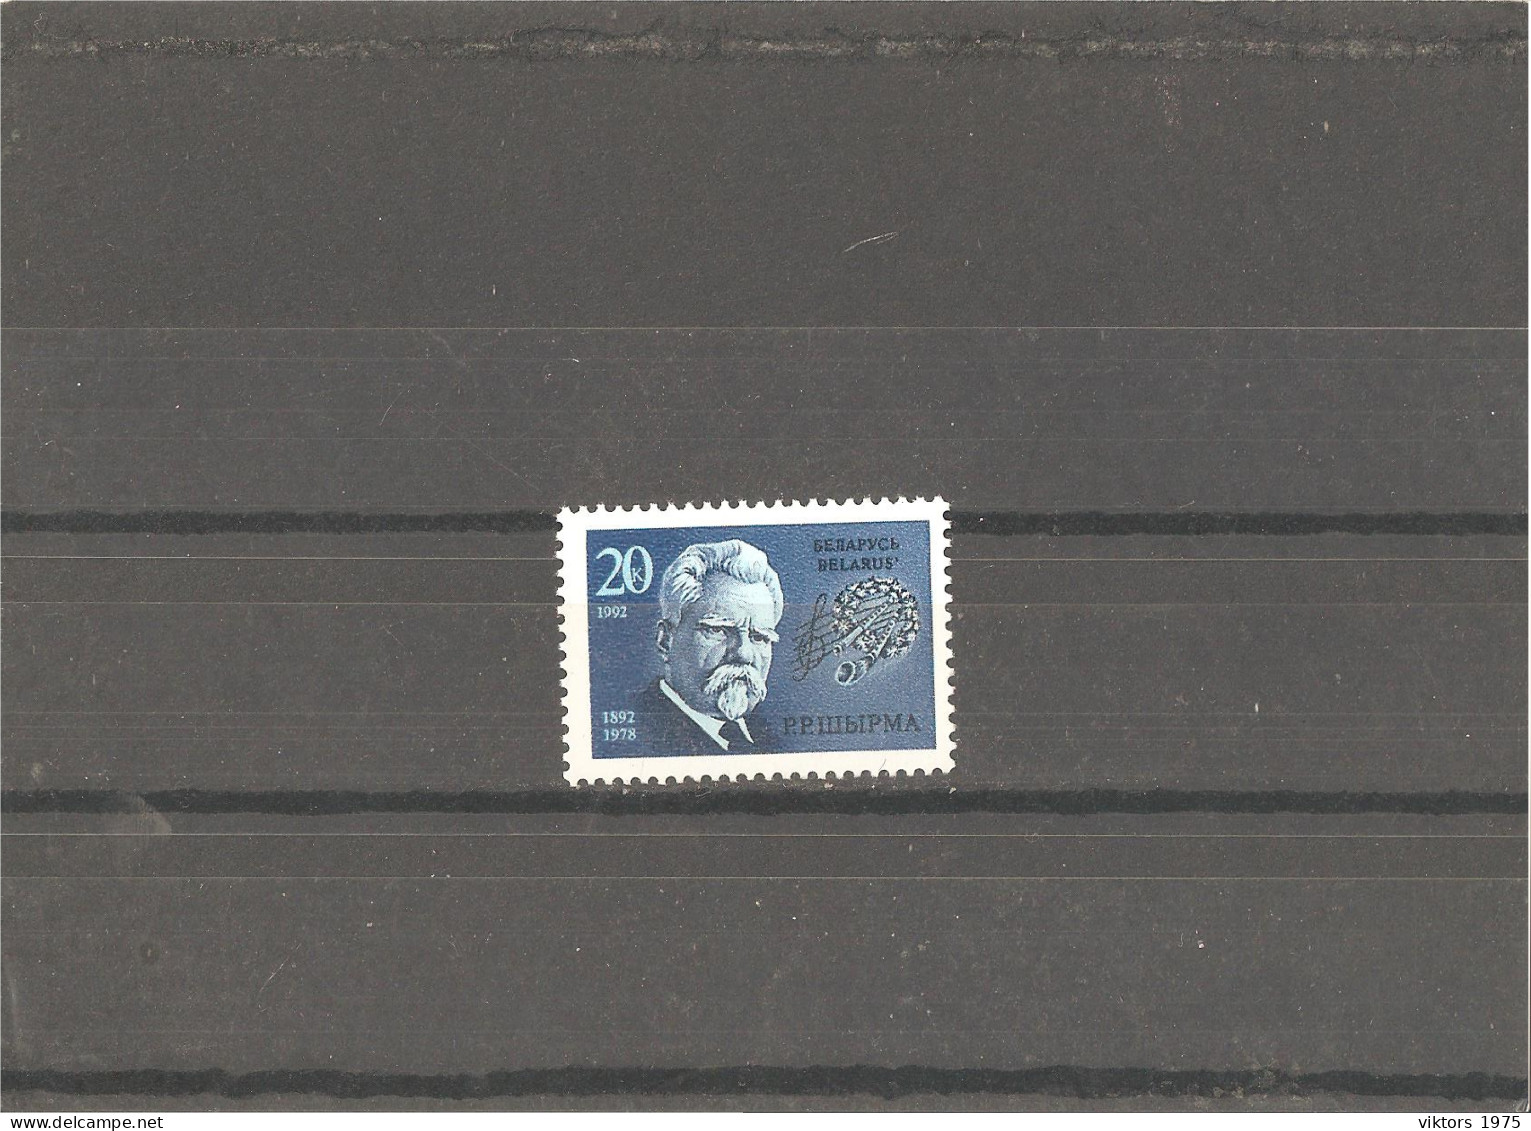 MNH Stamp Nr.2 In MICHEL Catalog - Bielorrusia